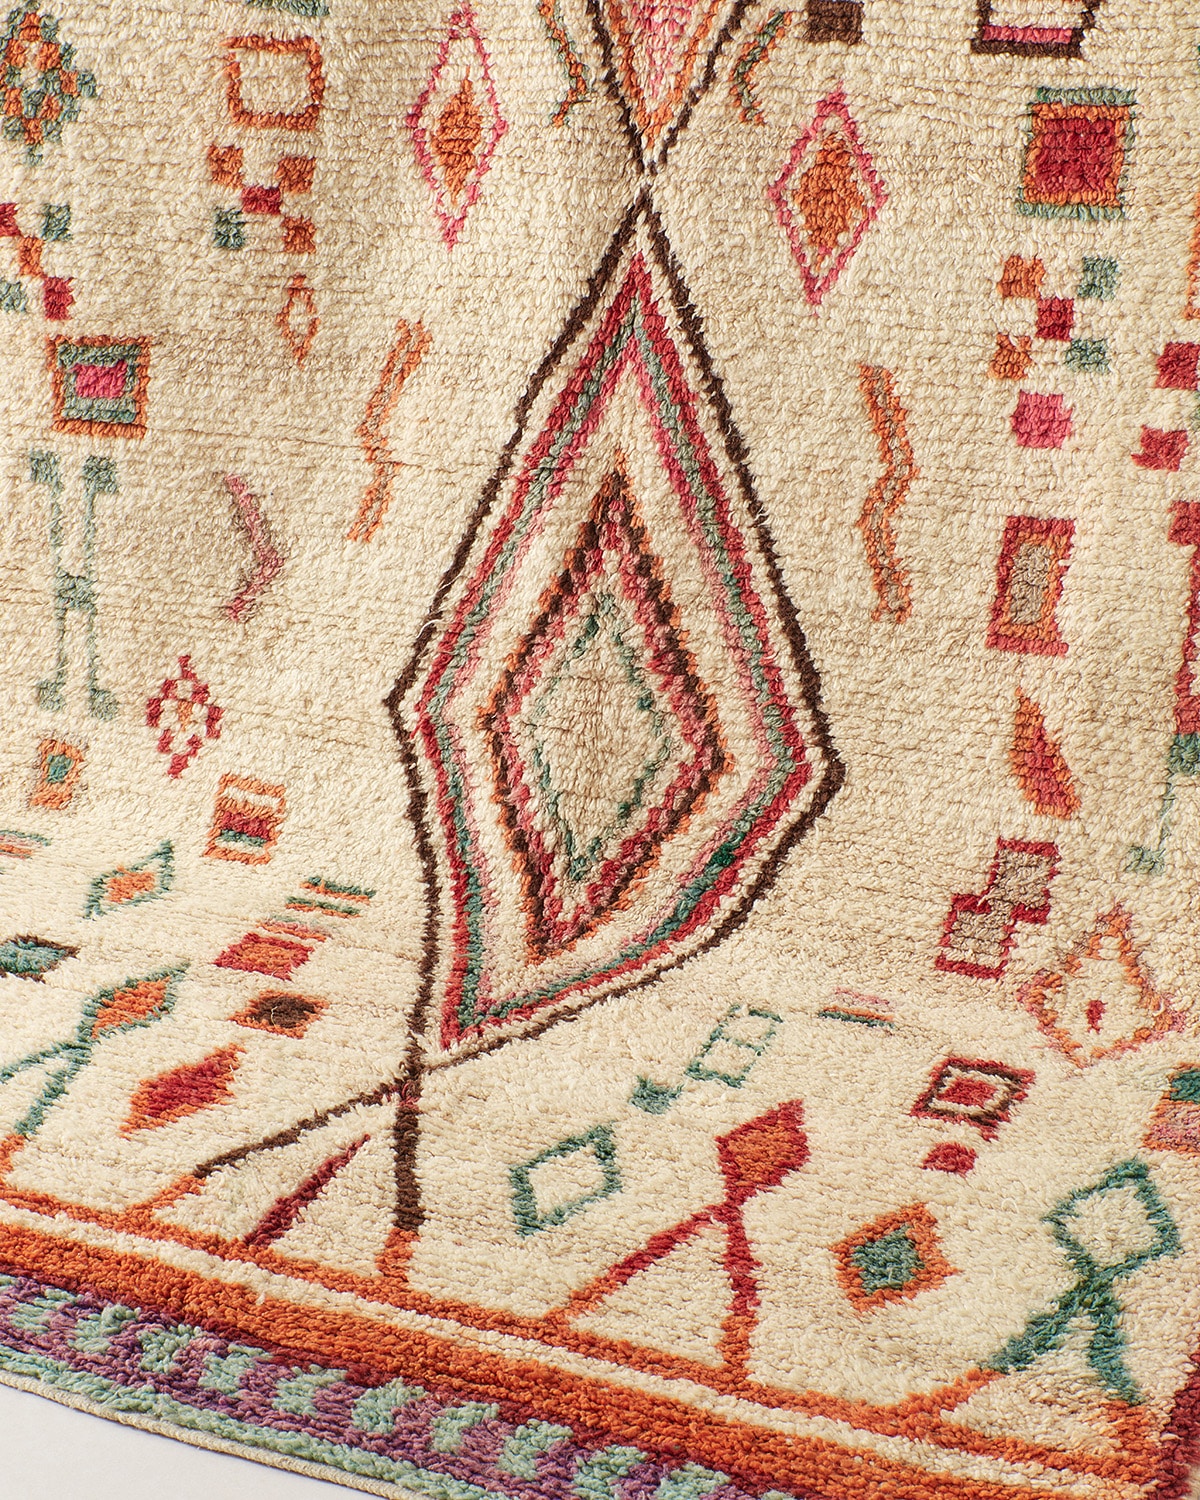 Playful giant rug, detail